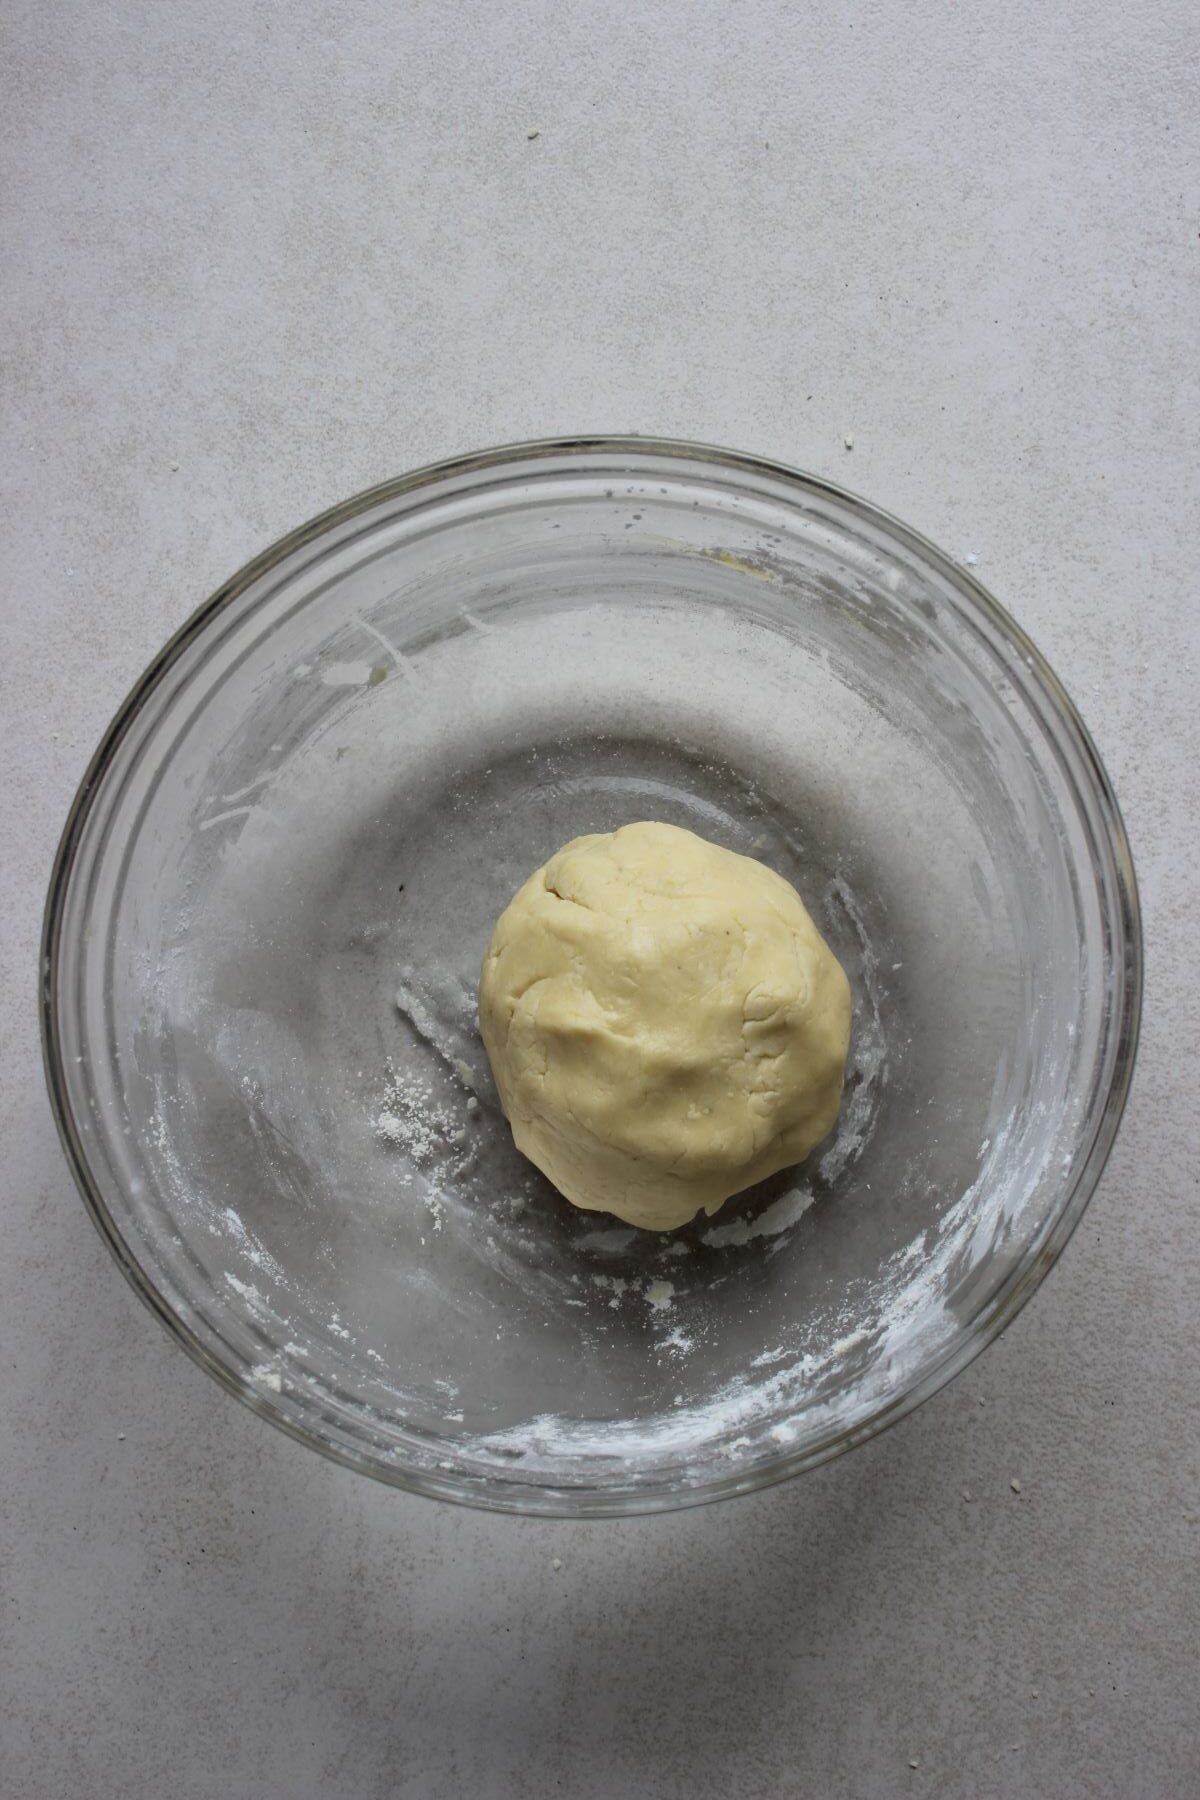 A cookie dough ball on a glass bowl.